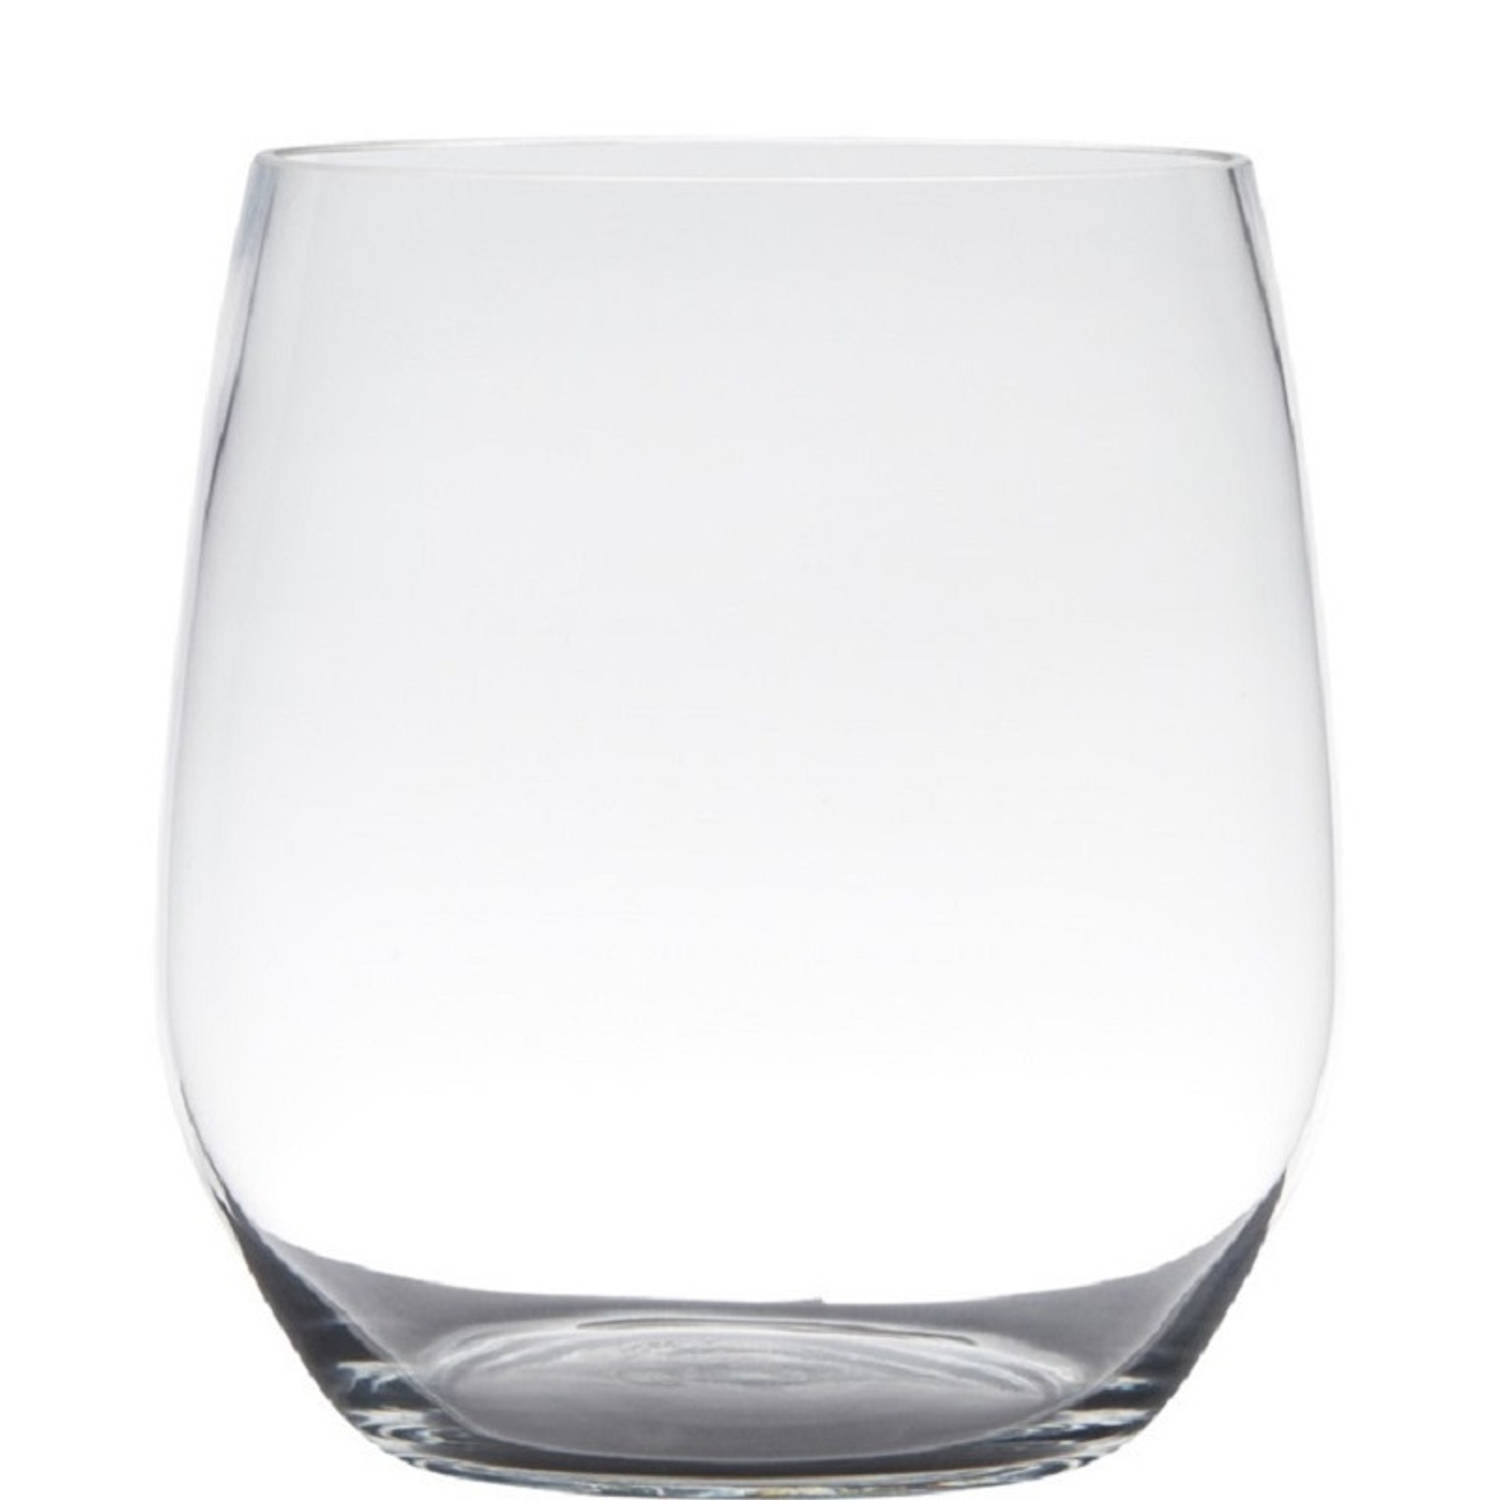 Transparante home-basics vaas/vazen van glas 15 x 12 cm Tony - Vazen